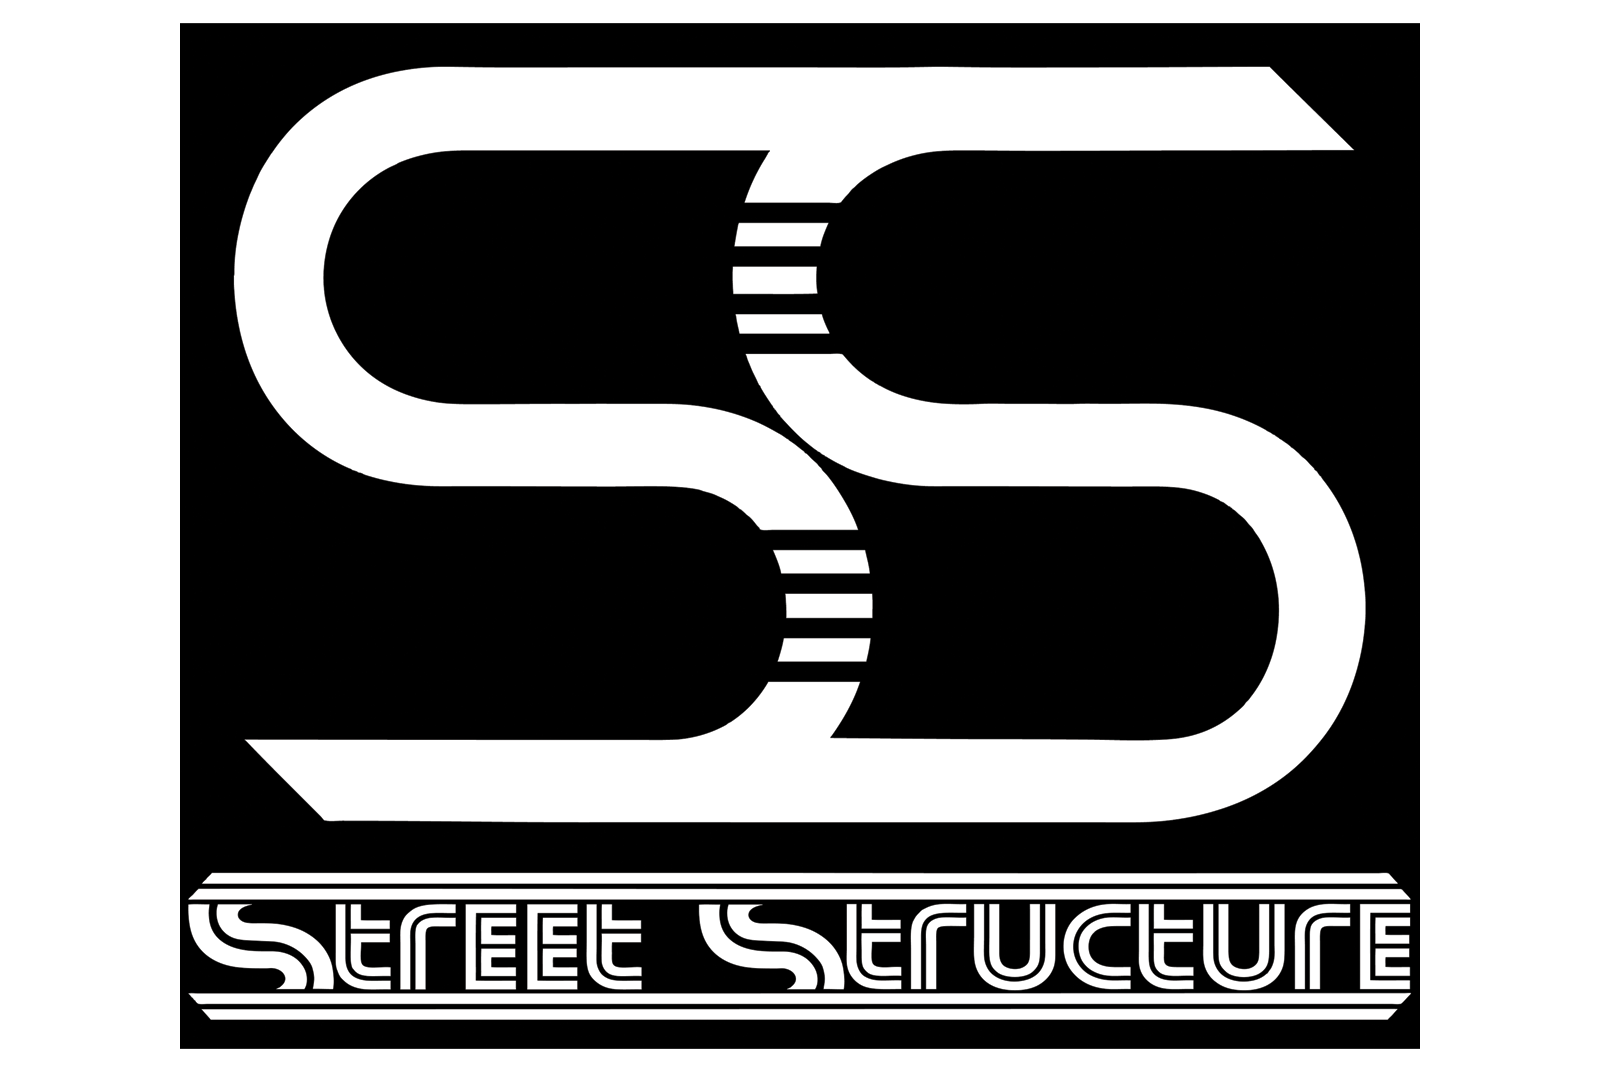 Street structure logo